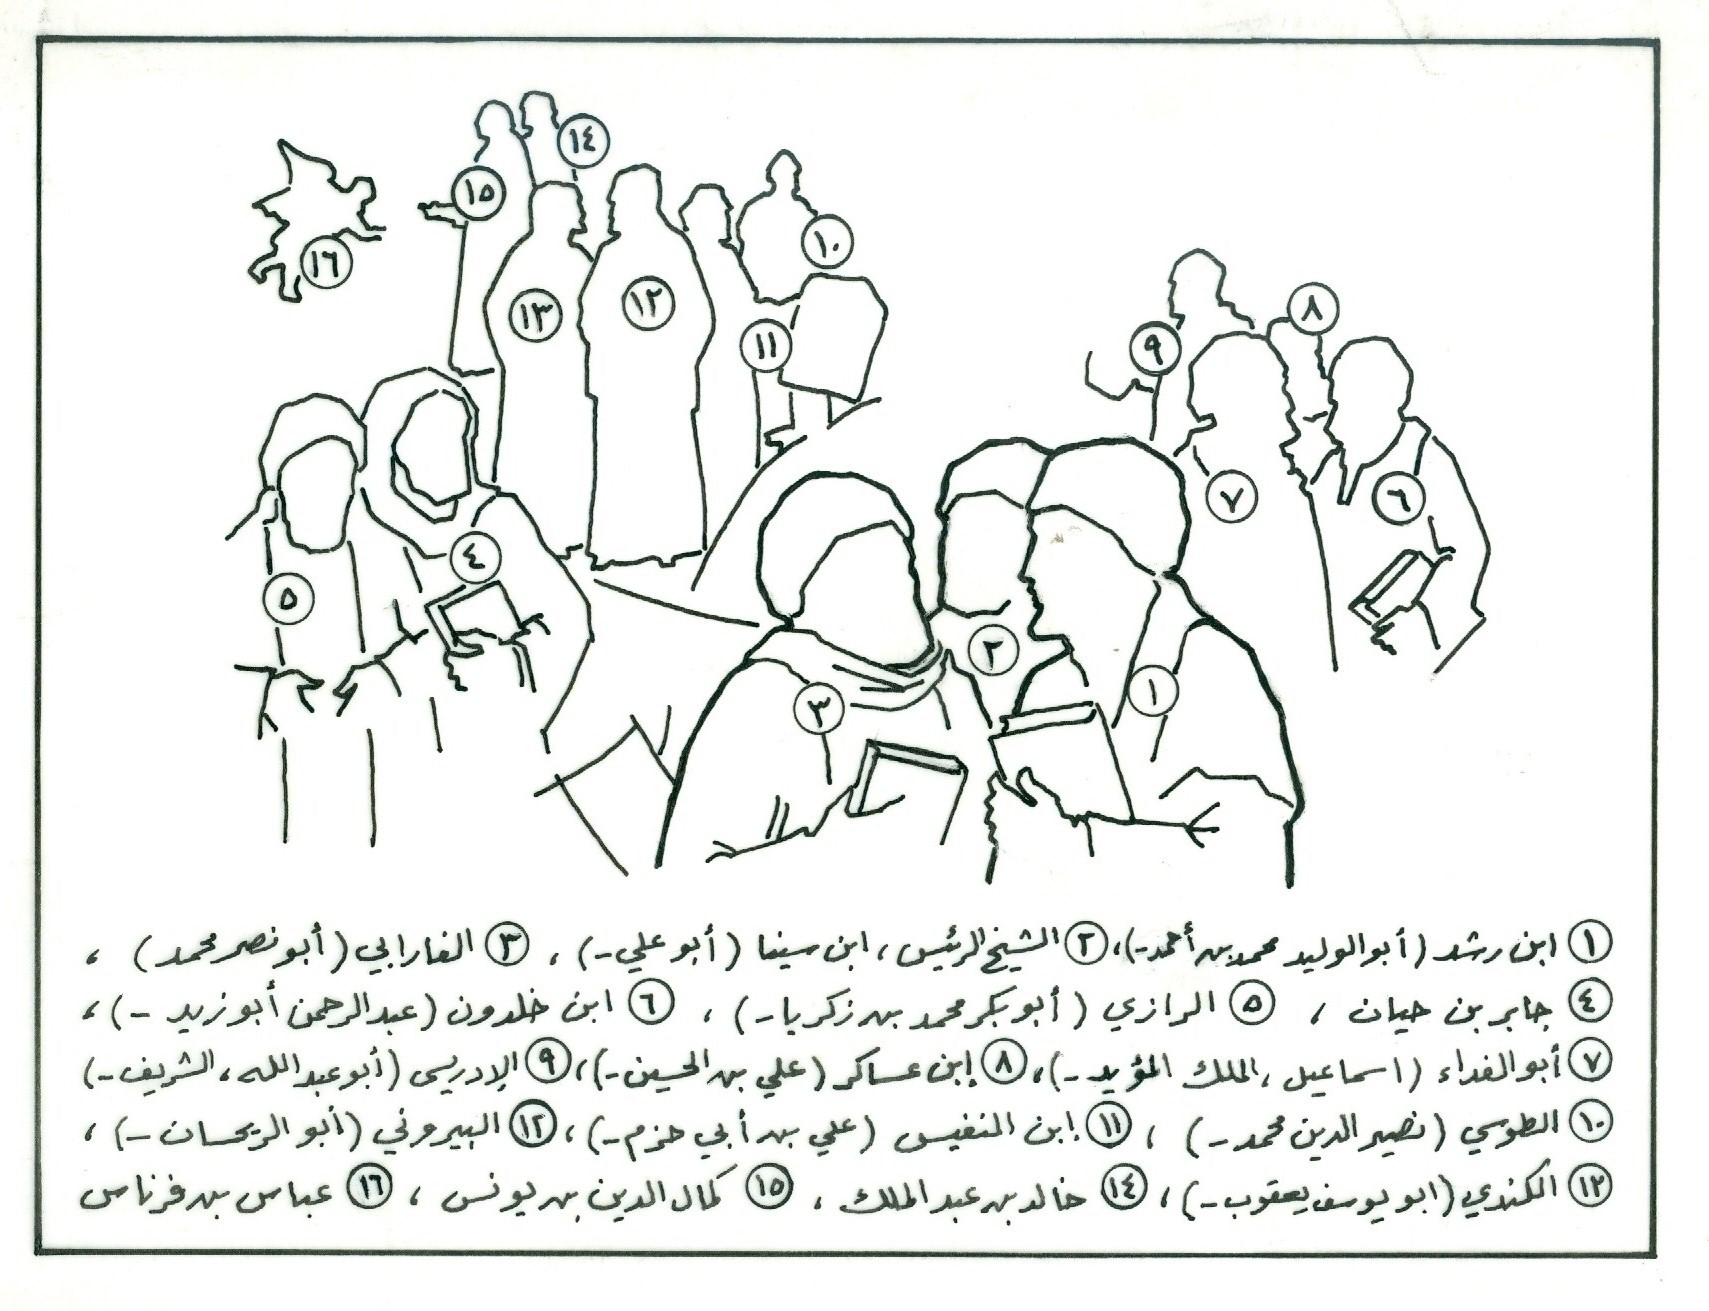 Islamic Scientists 1988 Mahmoud Hammad